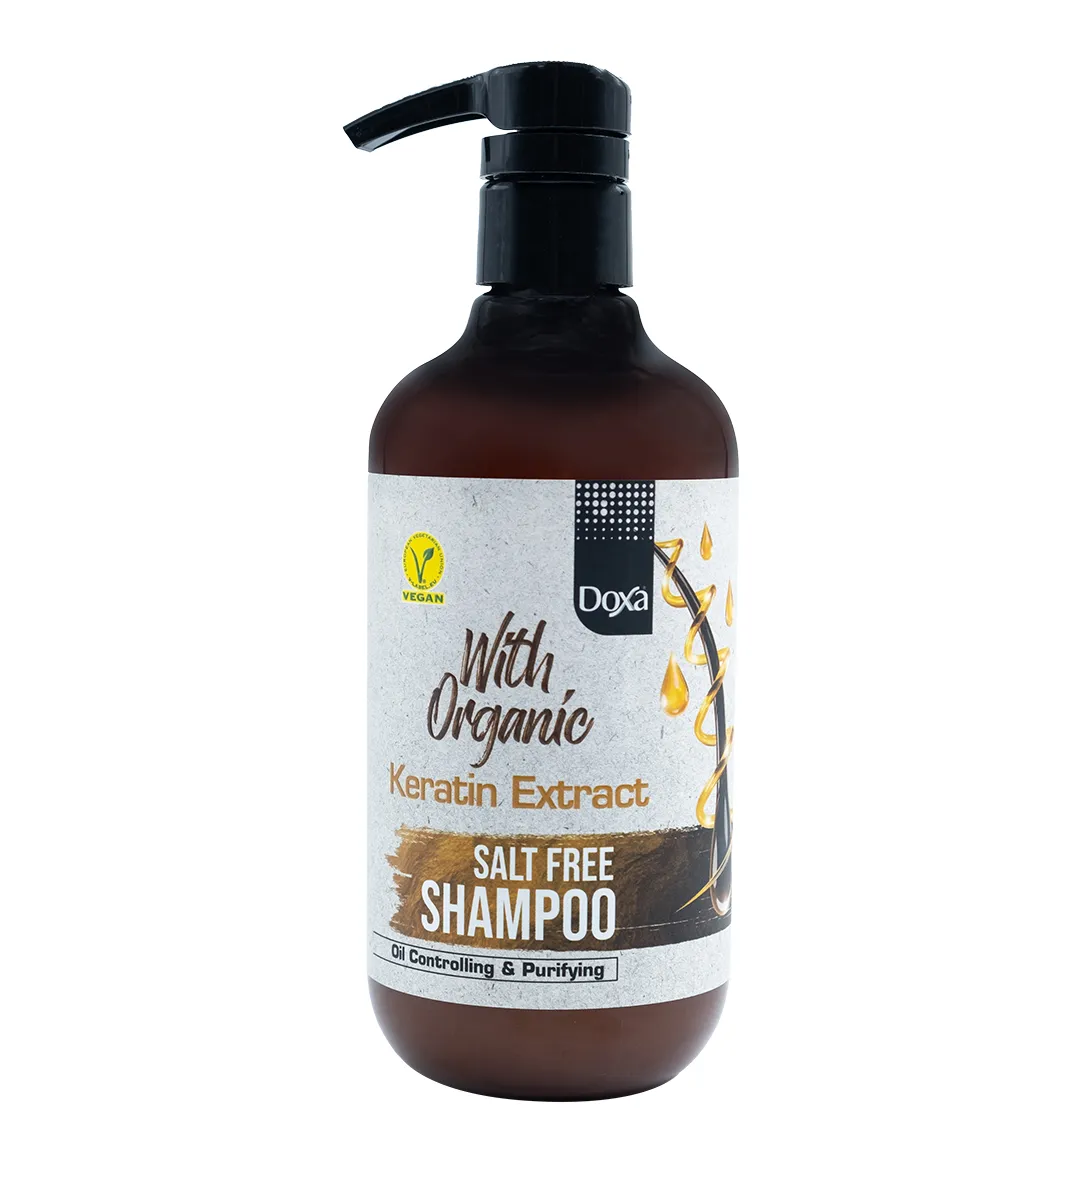 Doxa 500 Ml Salt Free Shampoo With Organic Keratin Extract - Oil Controlling & Purifying